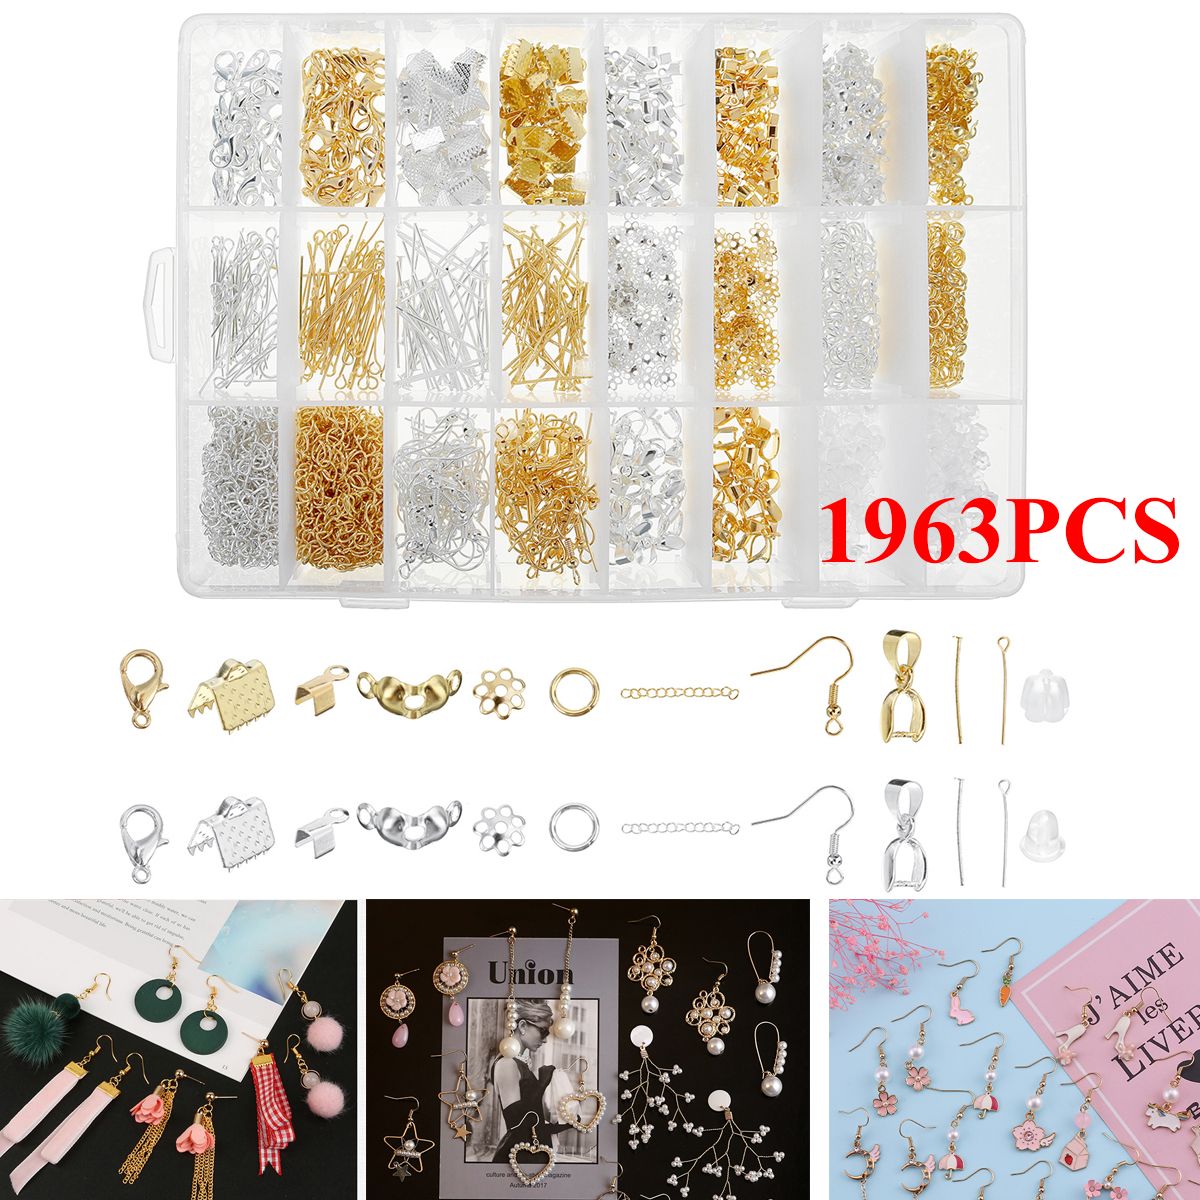 1963pcs-Gold-Silver-Mixed-Color-Repair-Metal-Tools-DIY-Craft-Supplies-Set-Jewelry-1757839